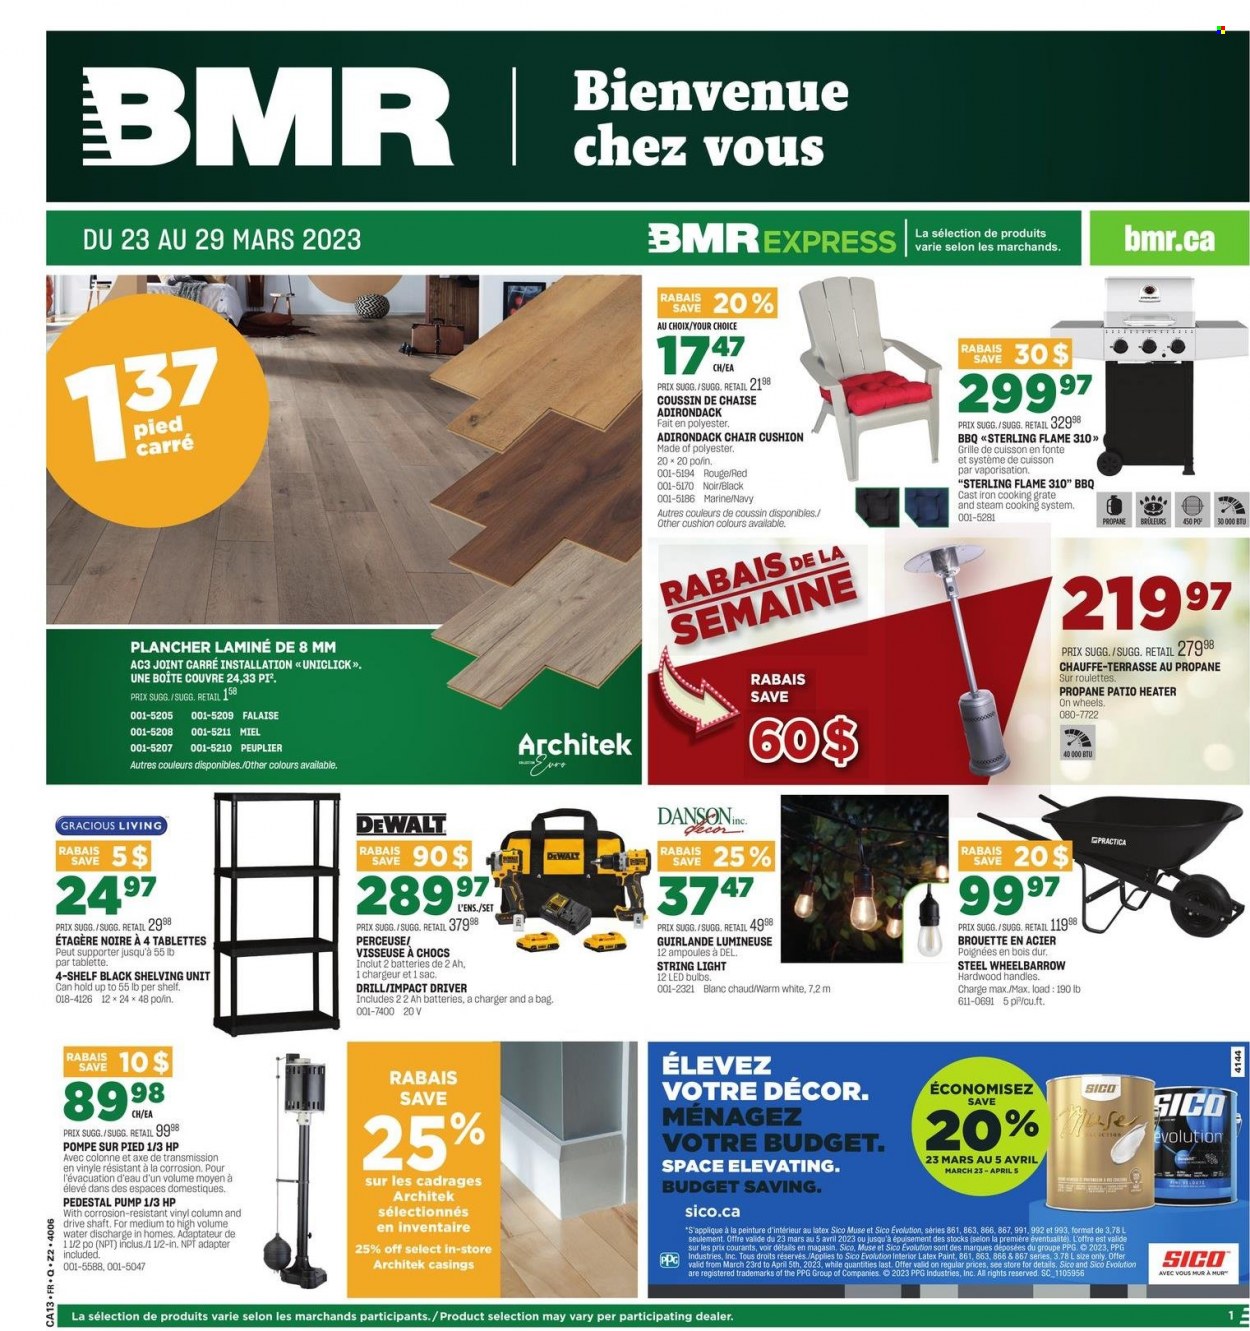 thumbnail - BMR Flyer - March 23, 2023 - March 29, 2023 - Sales products - cushion, PREMIERE, chair, shelf unit, string lights, heater, vinyl, DeWALT, drill, impact driver, wheelbarrow, Axe, pump. Page 1.